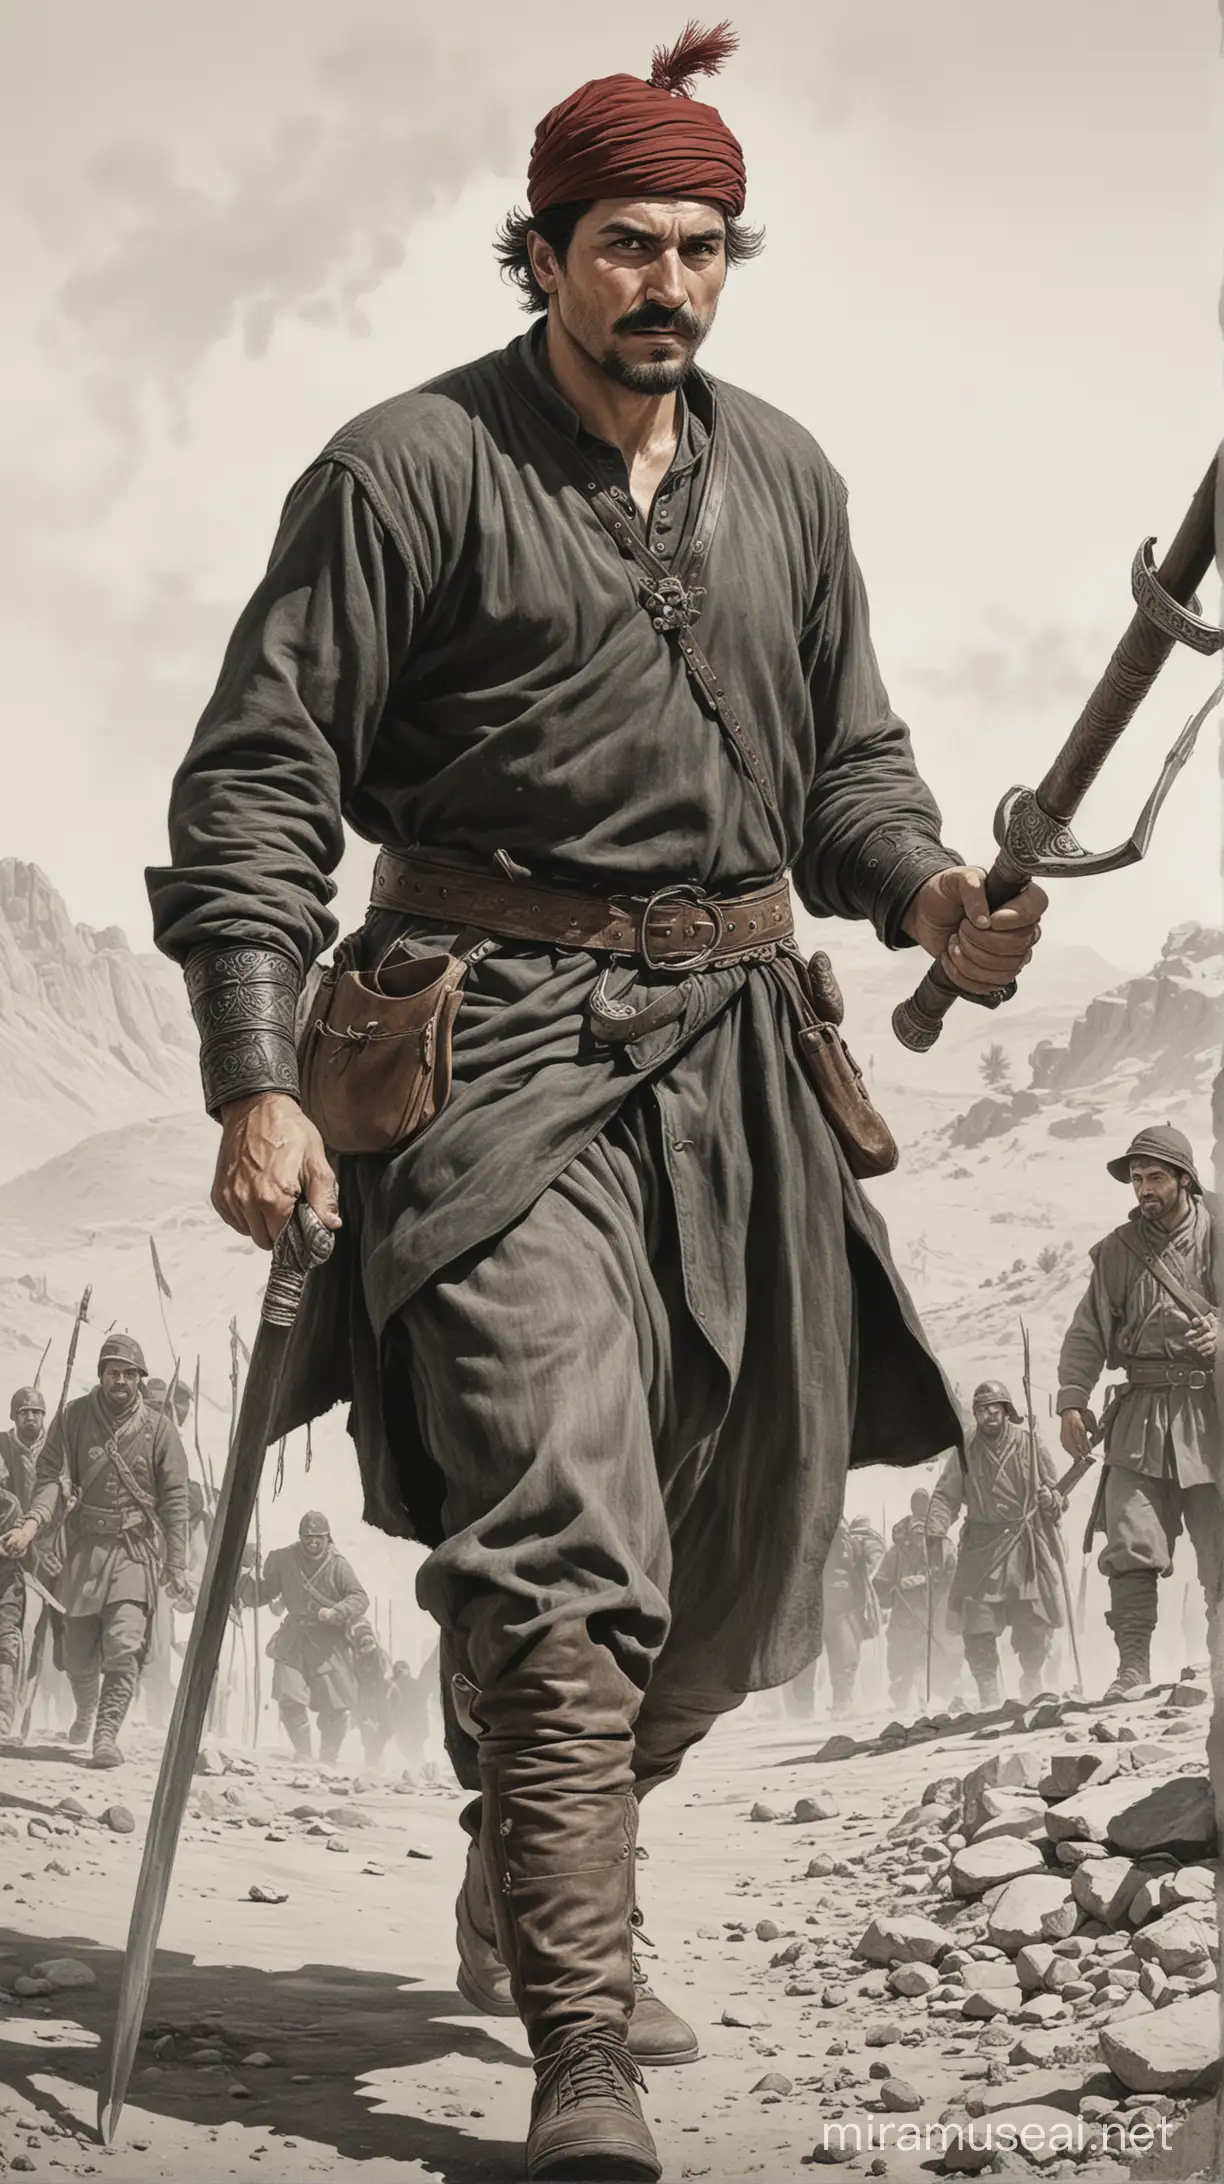 Short and stout. A drawing depicting Gürbüz Alp's brave memories as he advances through enemy lines wielding his mace.
